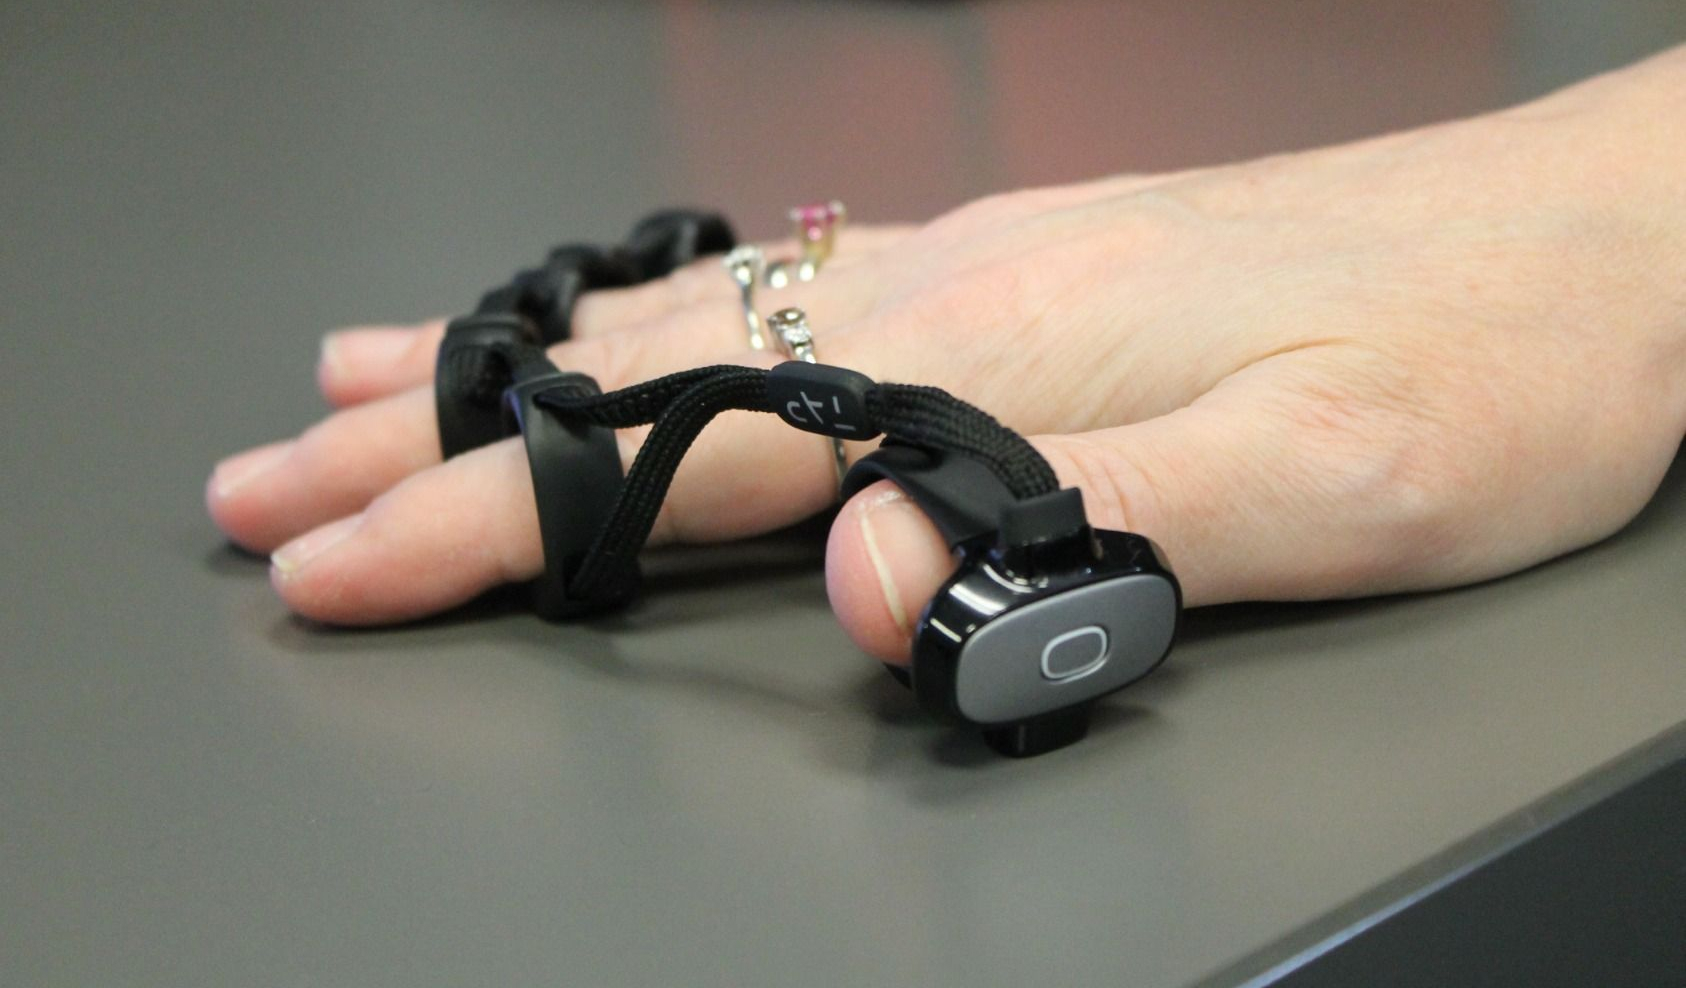 A hand wearing a virtual keyboard device